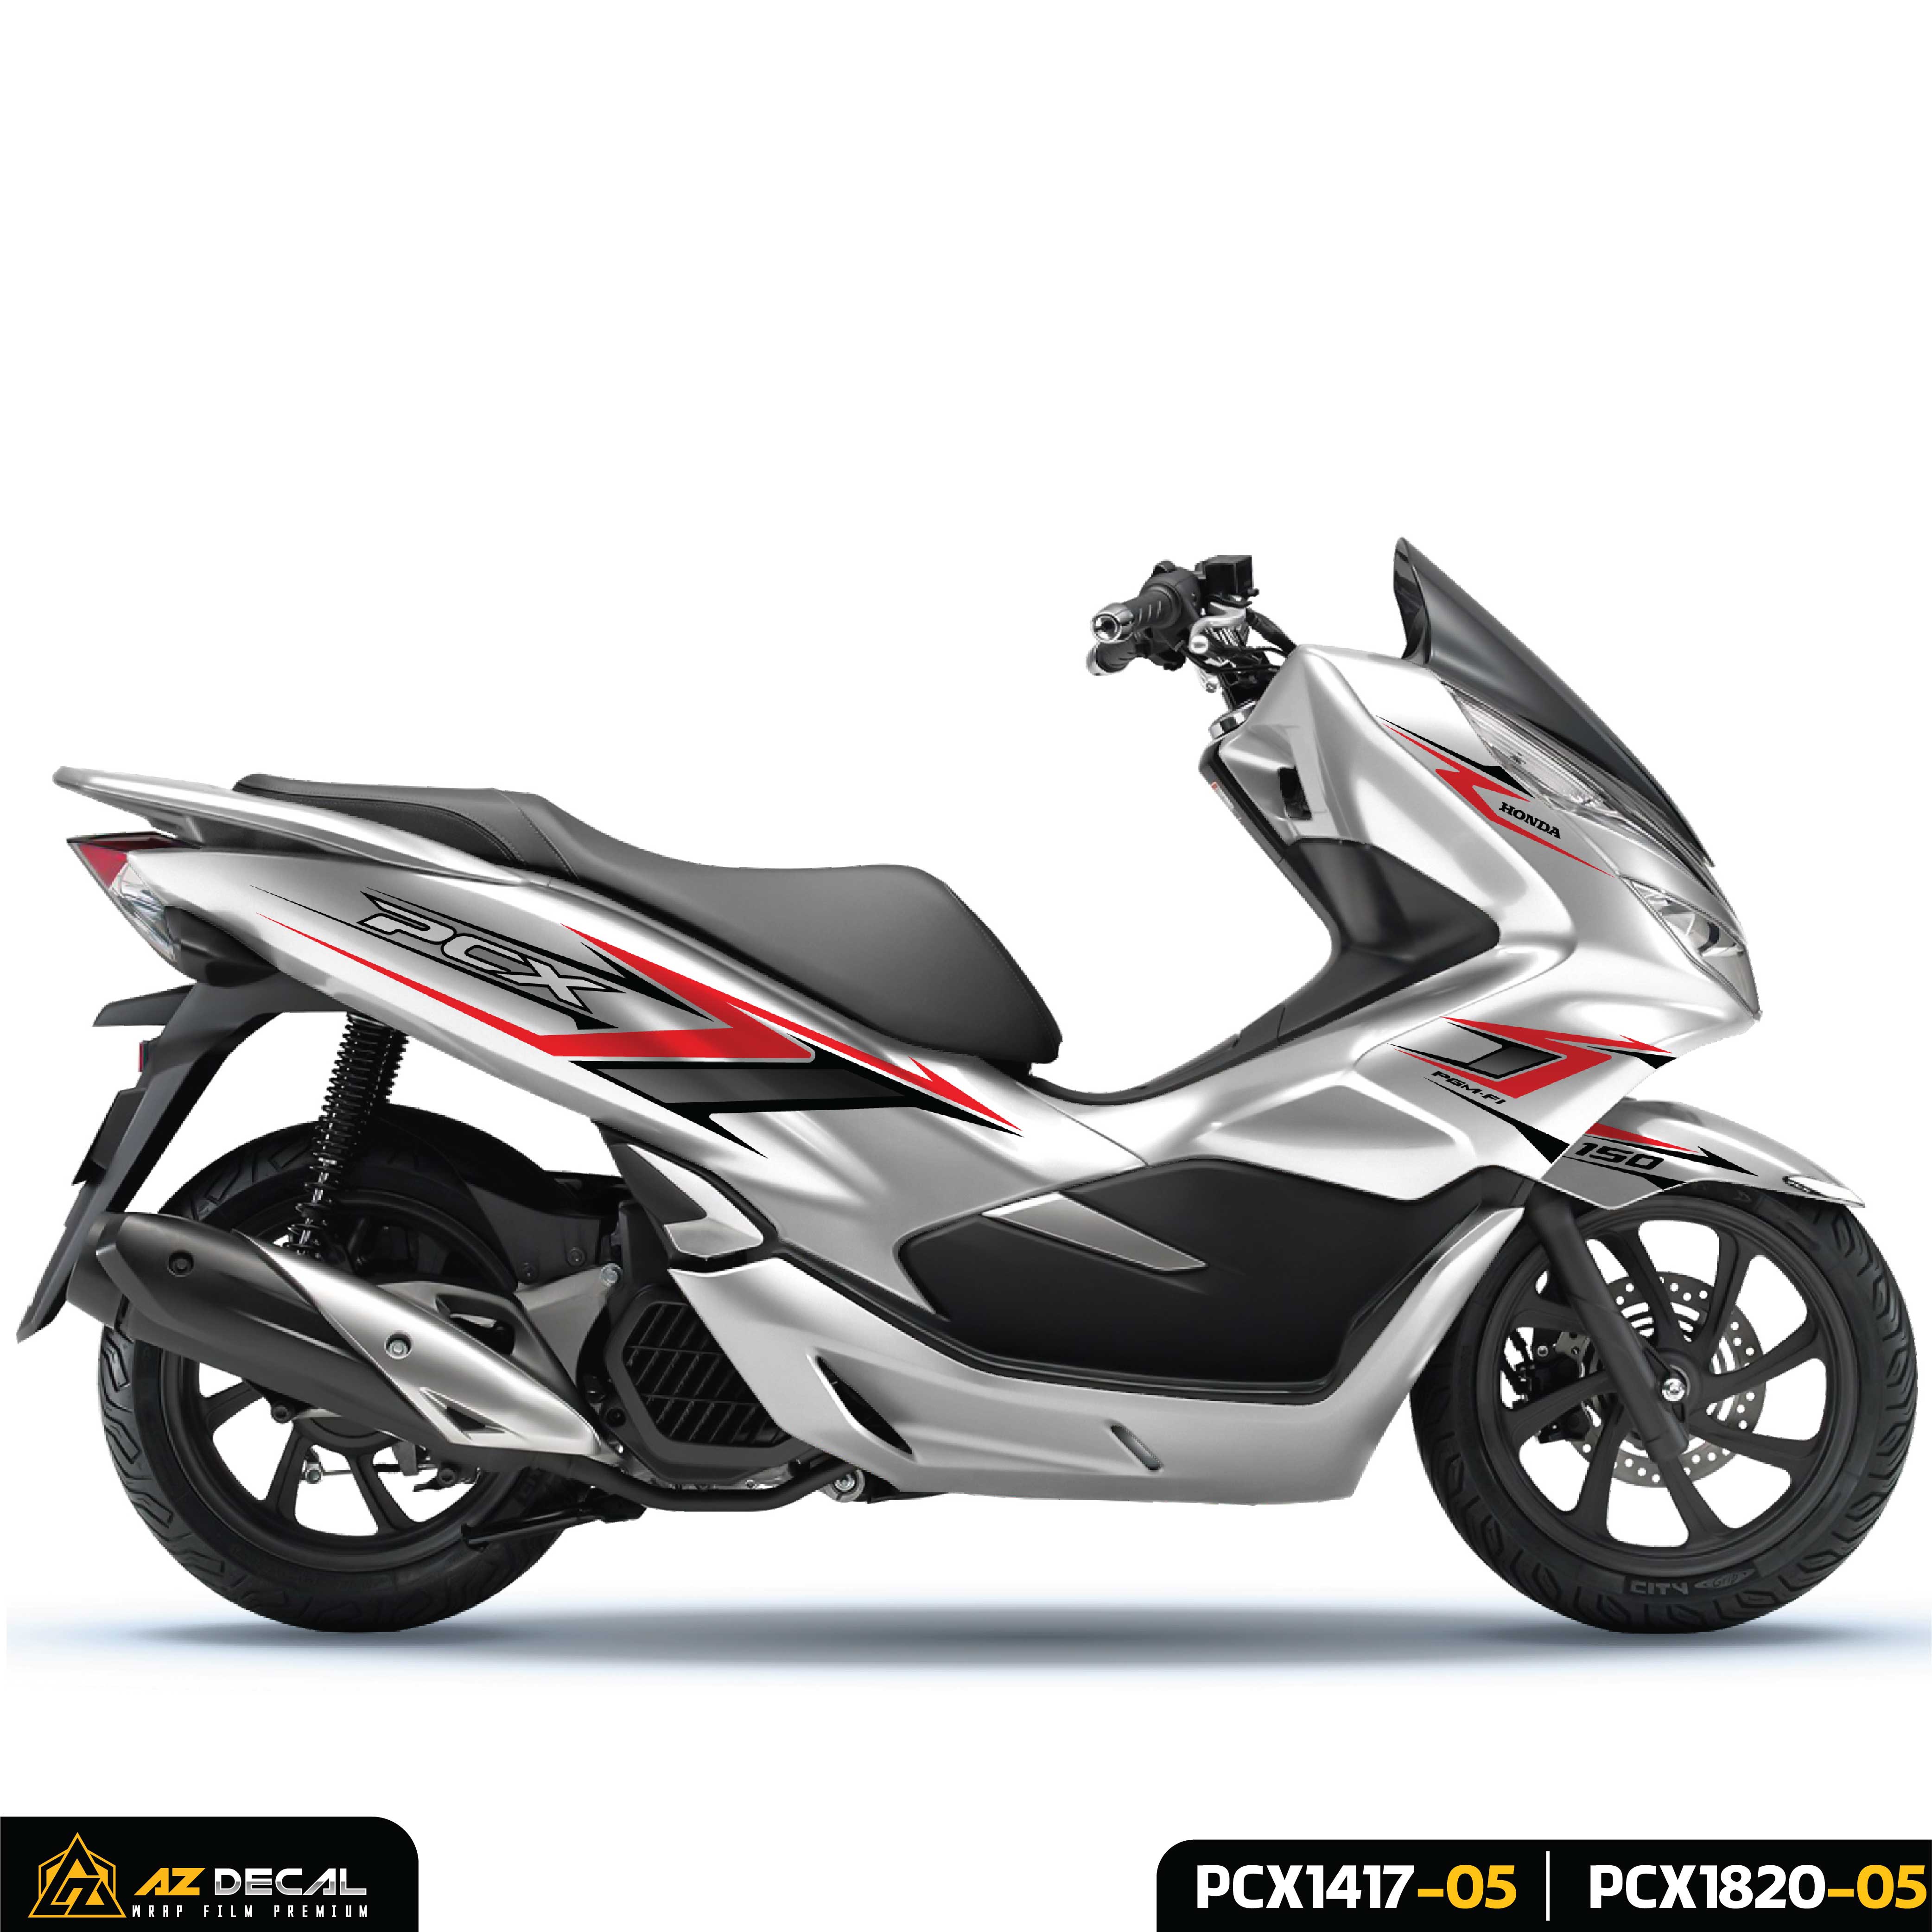 2018 Honda PCX150 scooter in Malaysia  RM10999  paultanorg